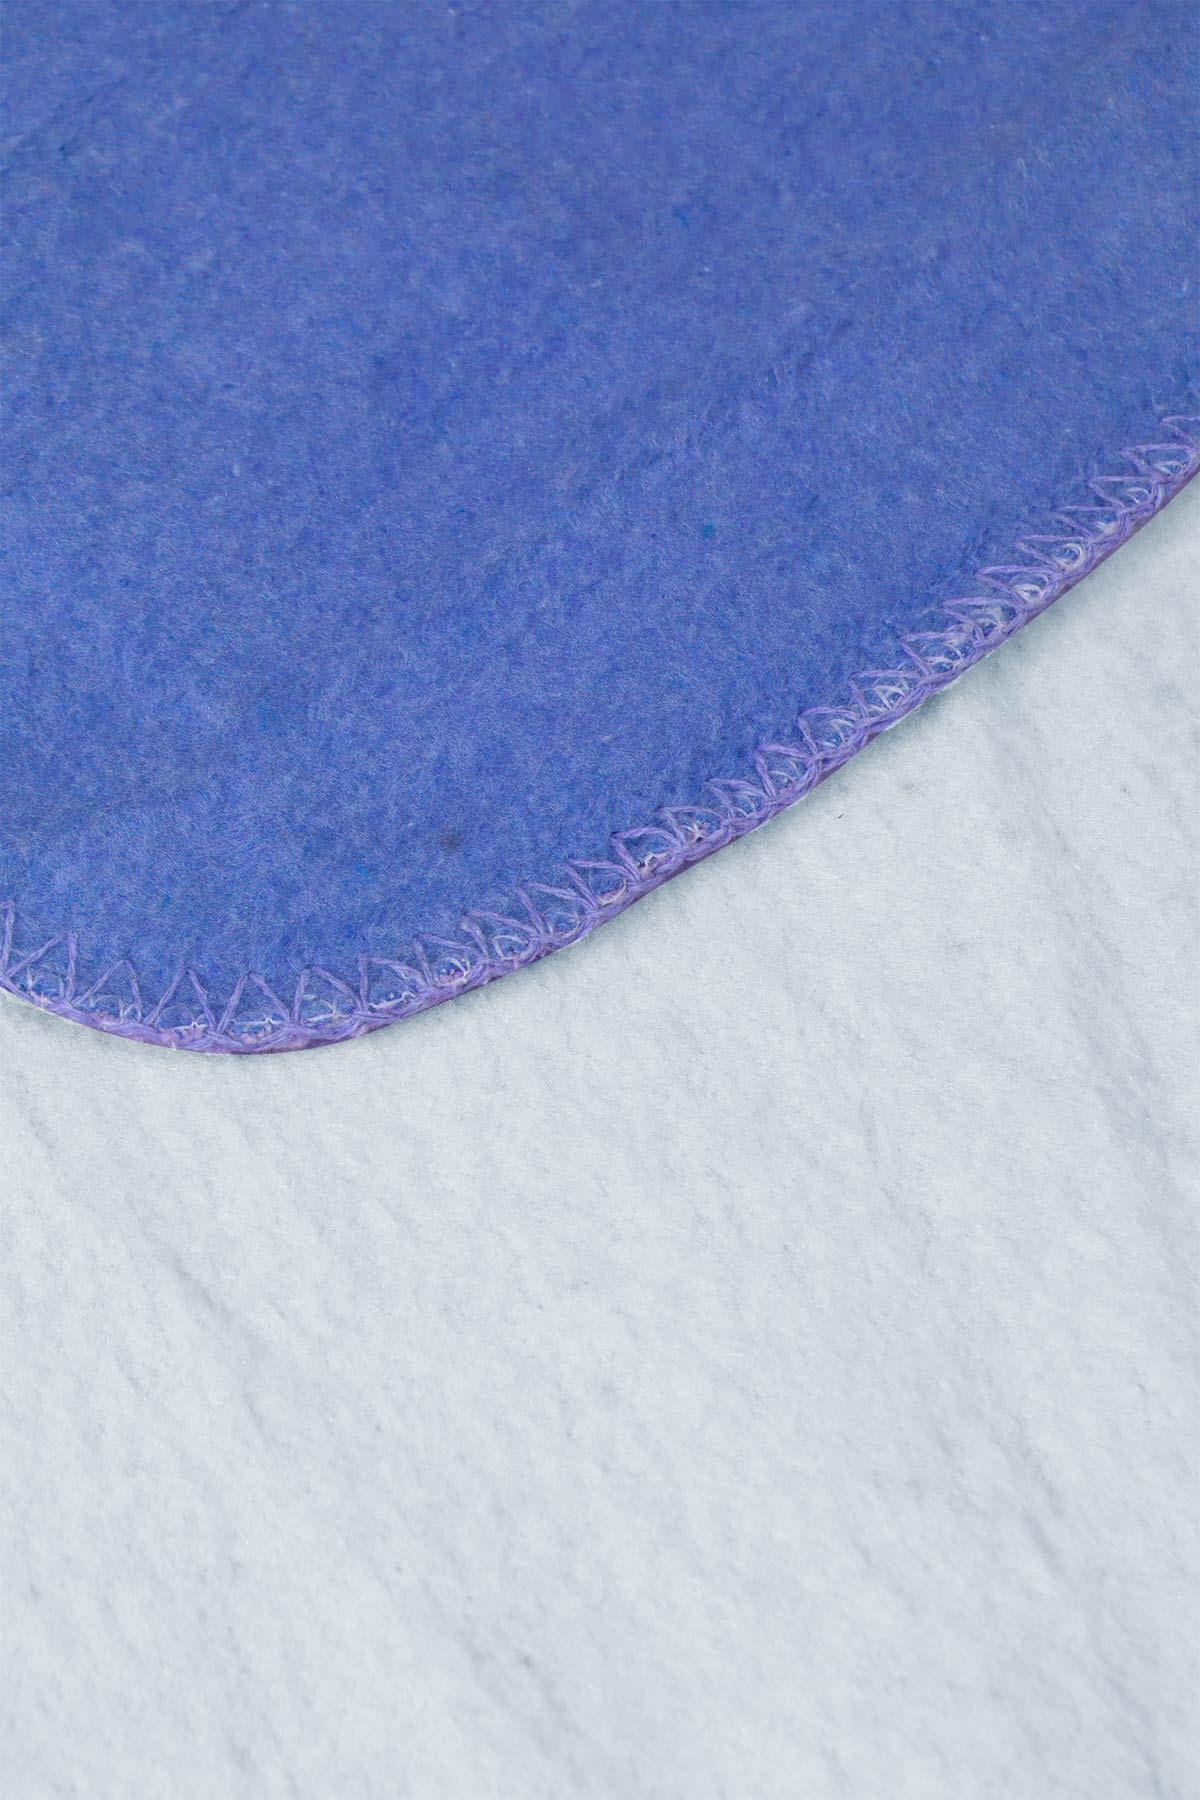 yesilhome cift kisilik pamuk battaniye cift tarafli battaniye lacivert mavi 120002.jpg